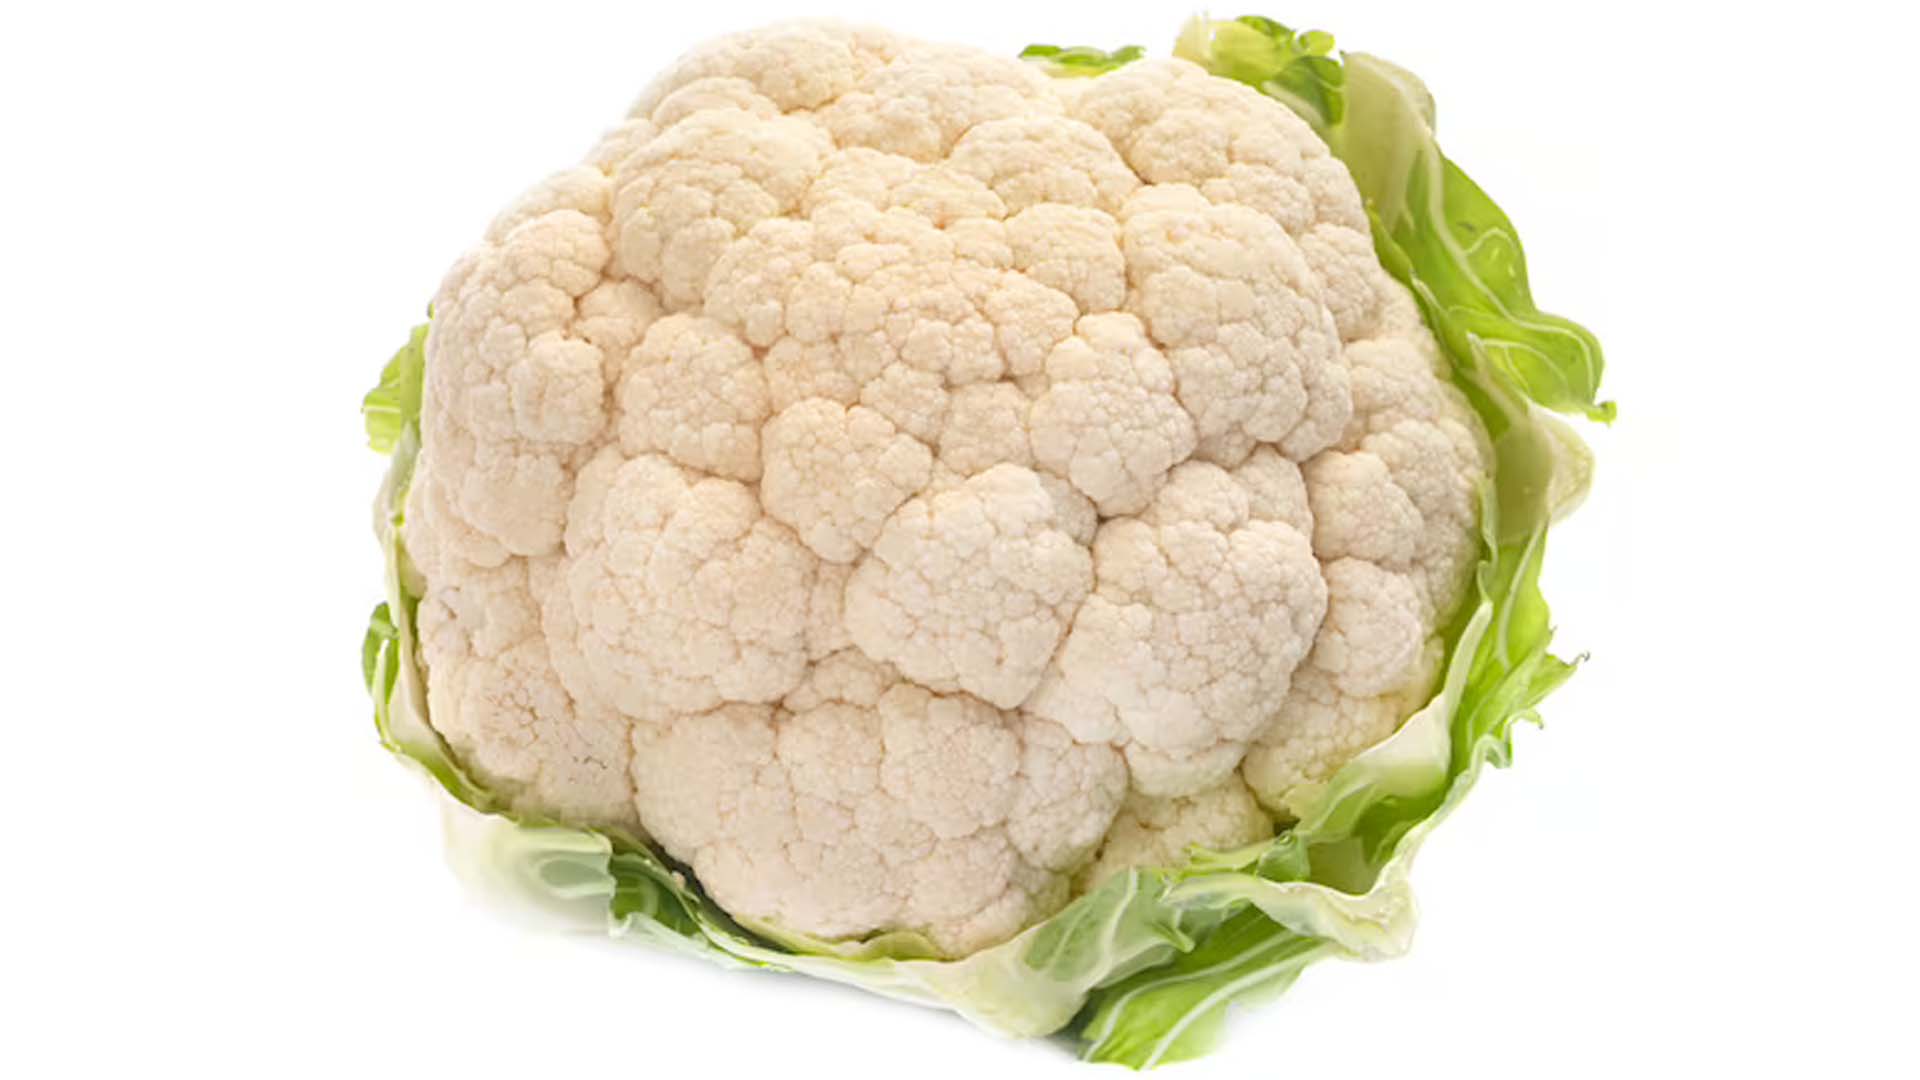 Nutritional value of cauliflower